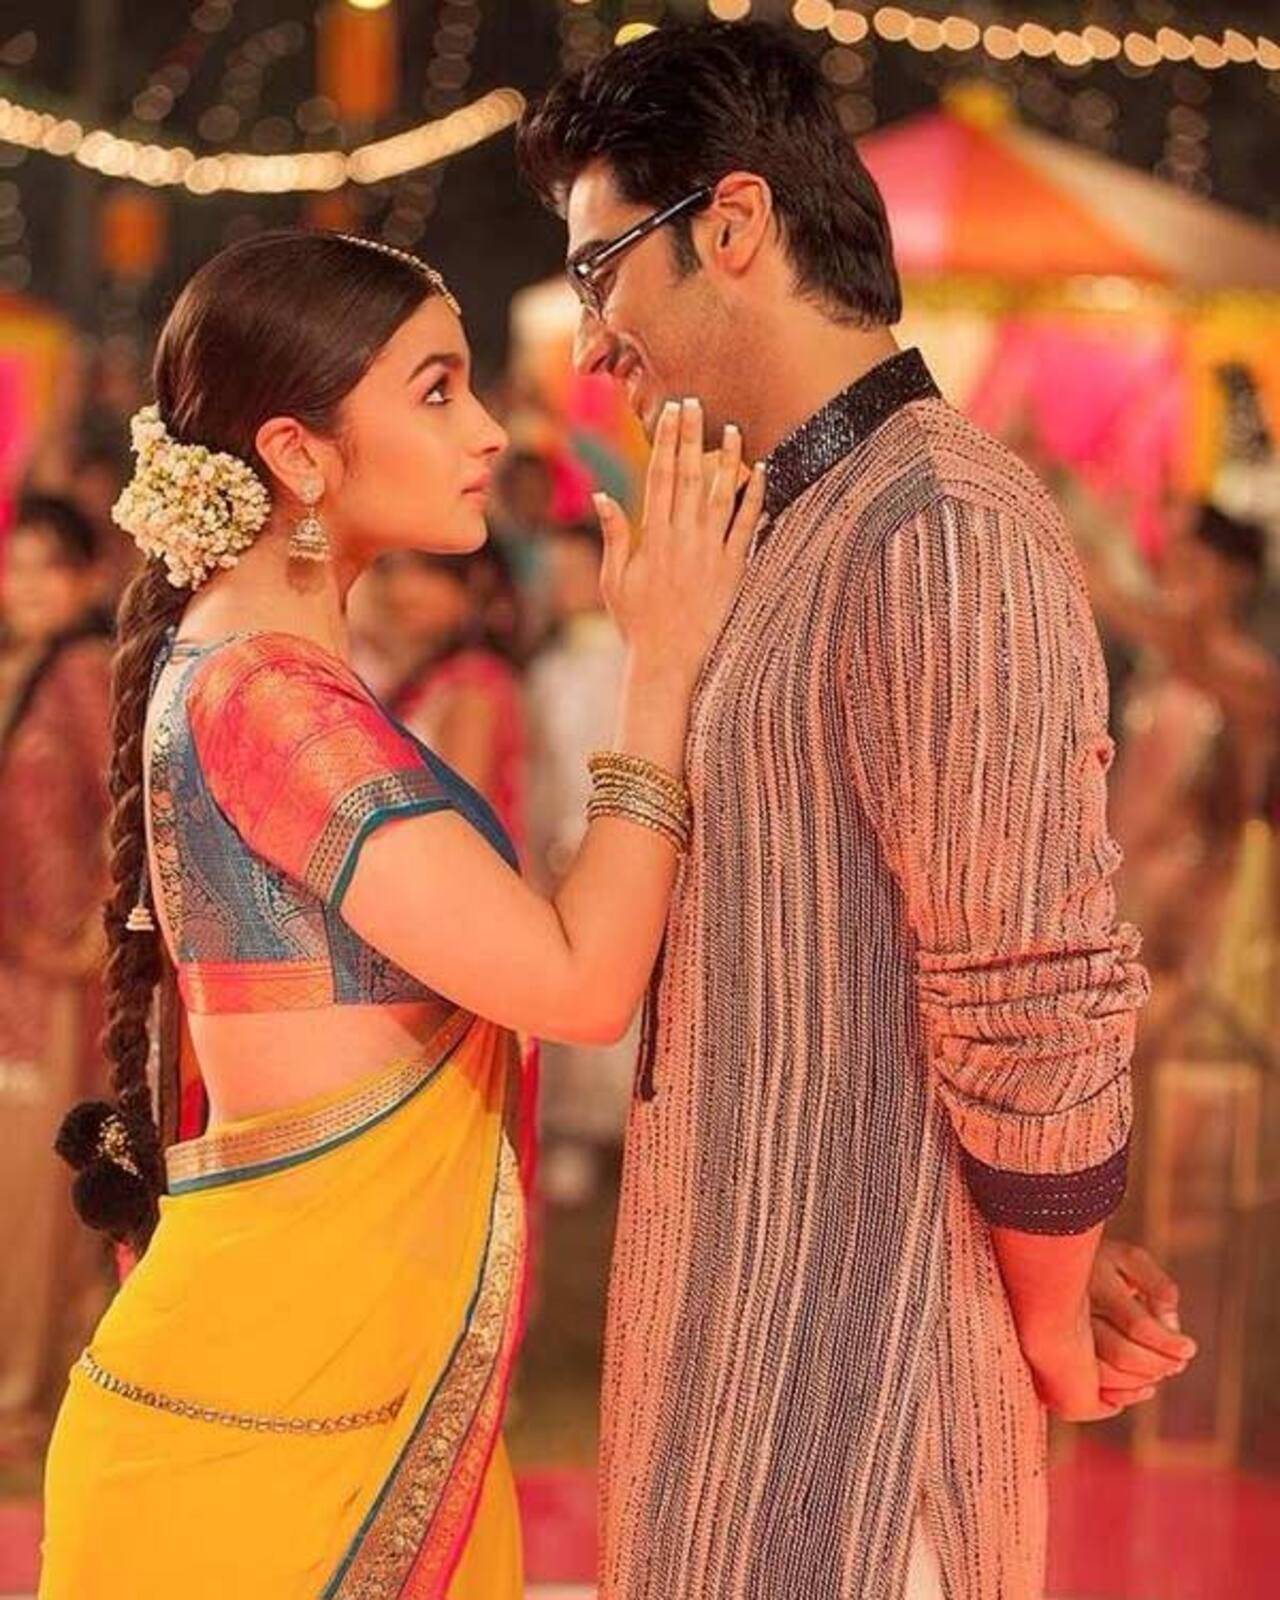 Arjun Kapoor and Alia Bhatt's 2 States crosses the Rs 100 crore mark -  Bollywood News & Gossip, Movie Reviews, Trailers & Videos at  